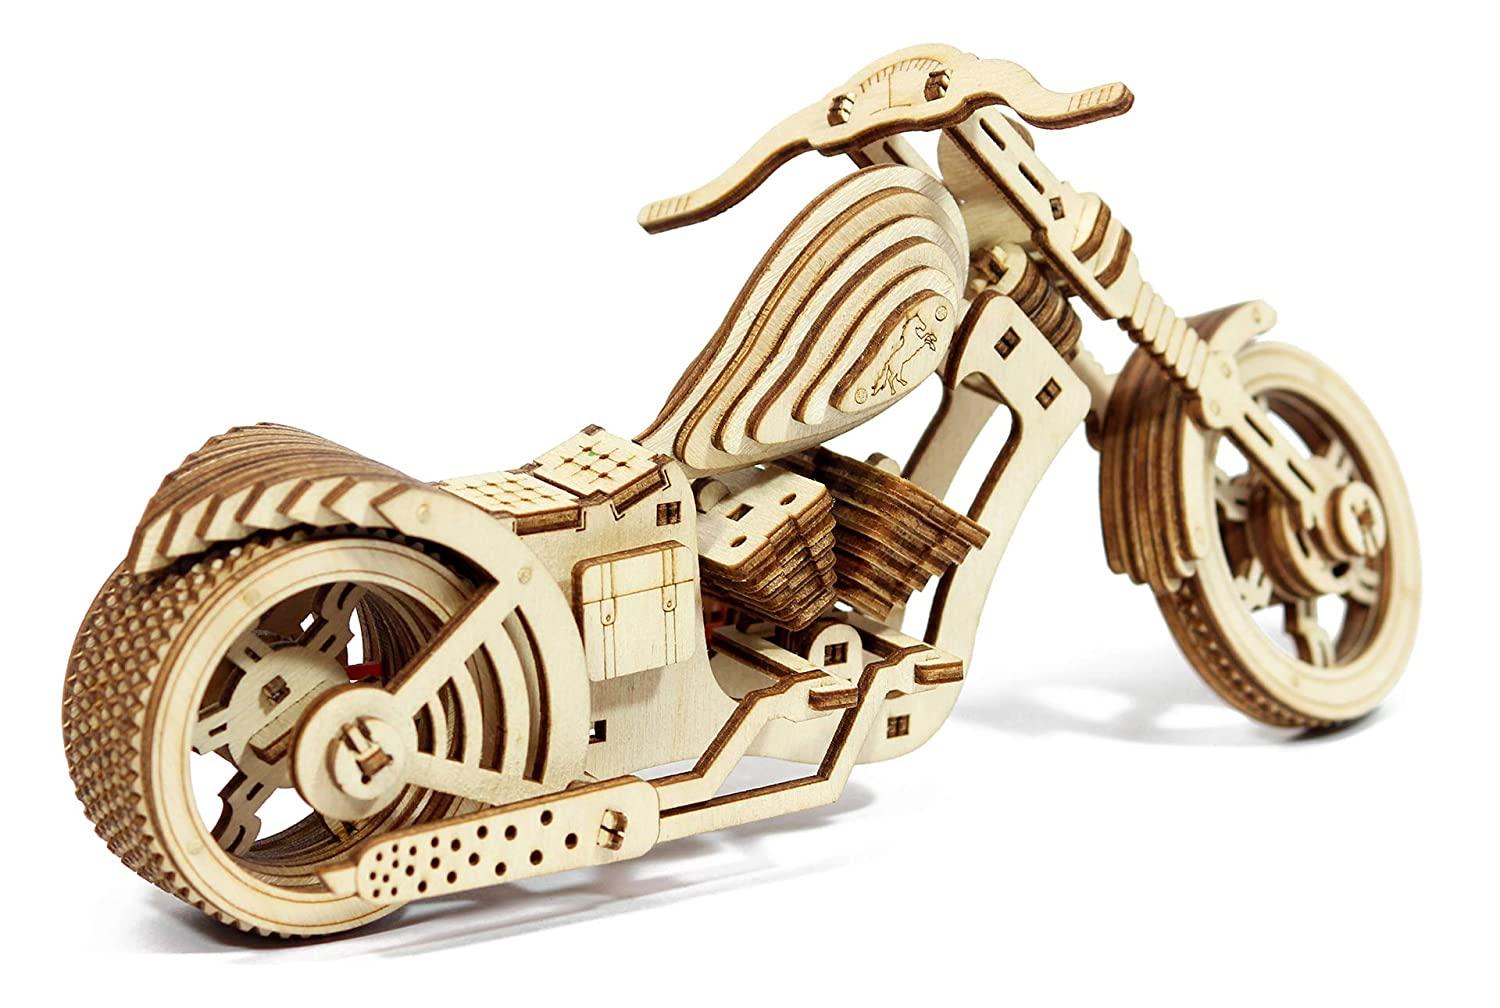 Funvention Cruiser Bike - DIY Mechanical Model - Build your own Bike model